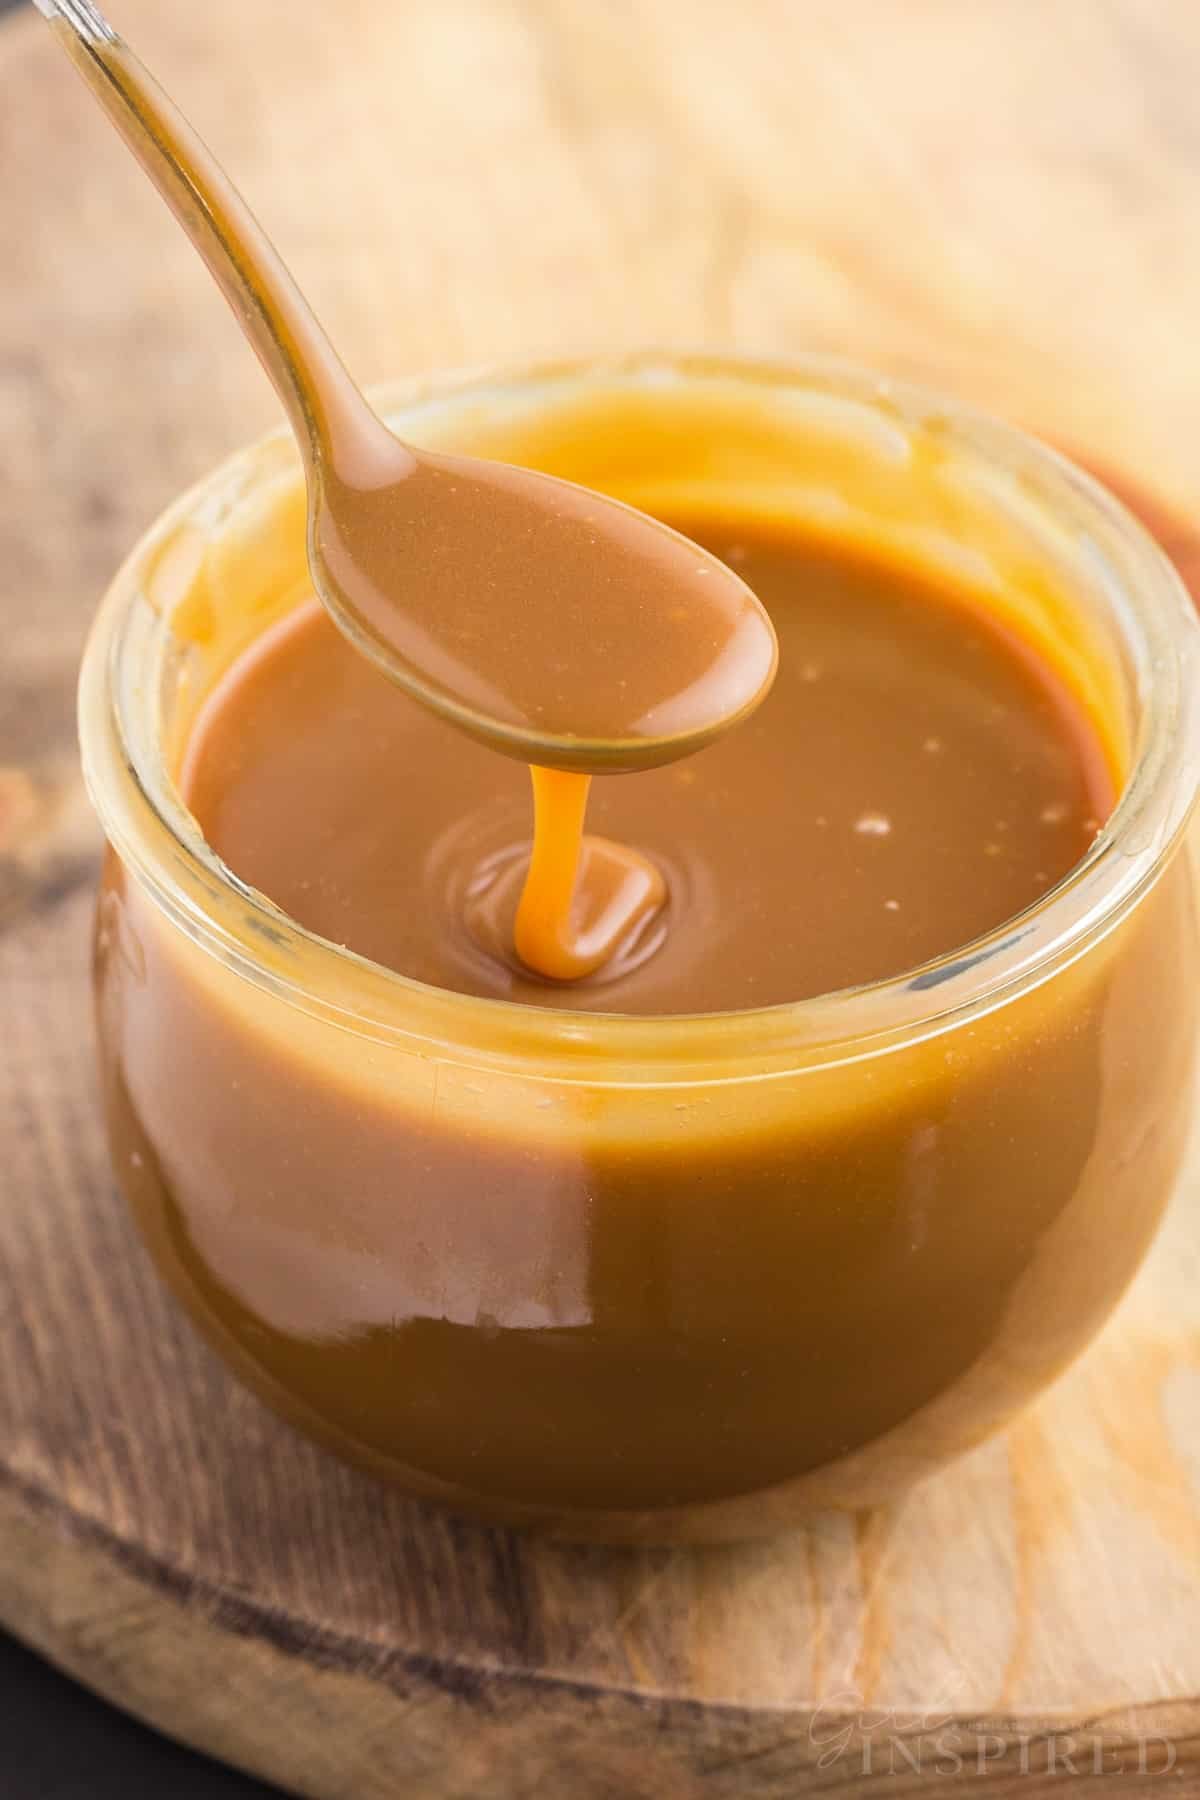 Brown sugar caramel sauce in a glass jar on a wooden kitchen board.